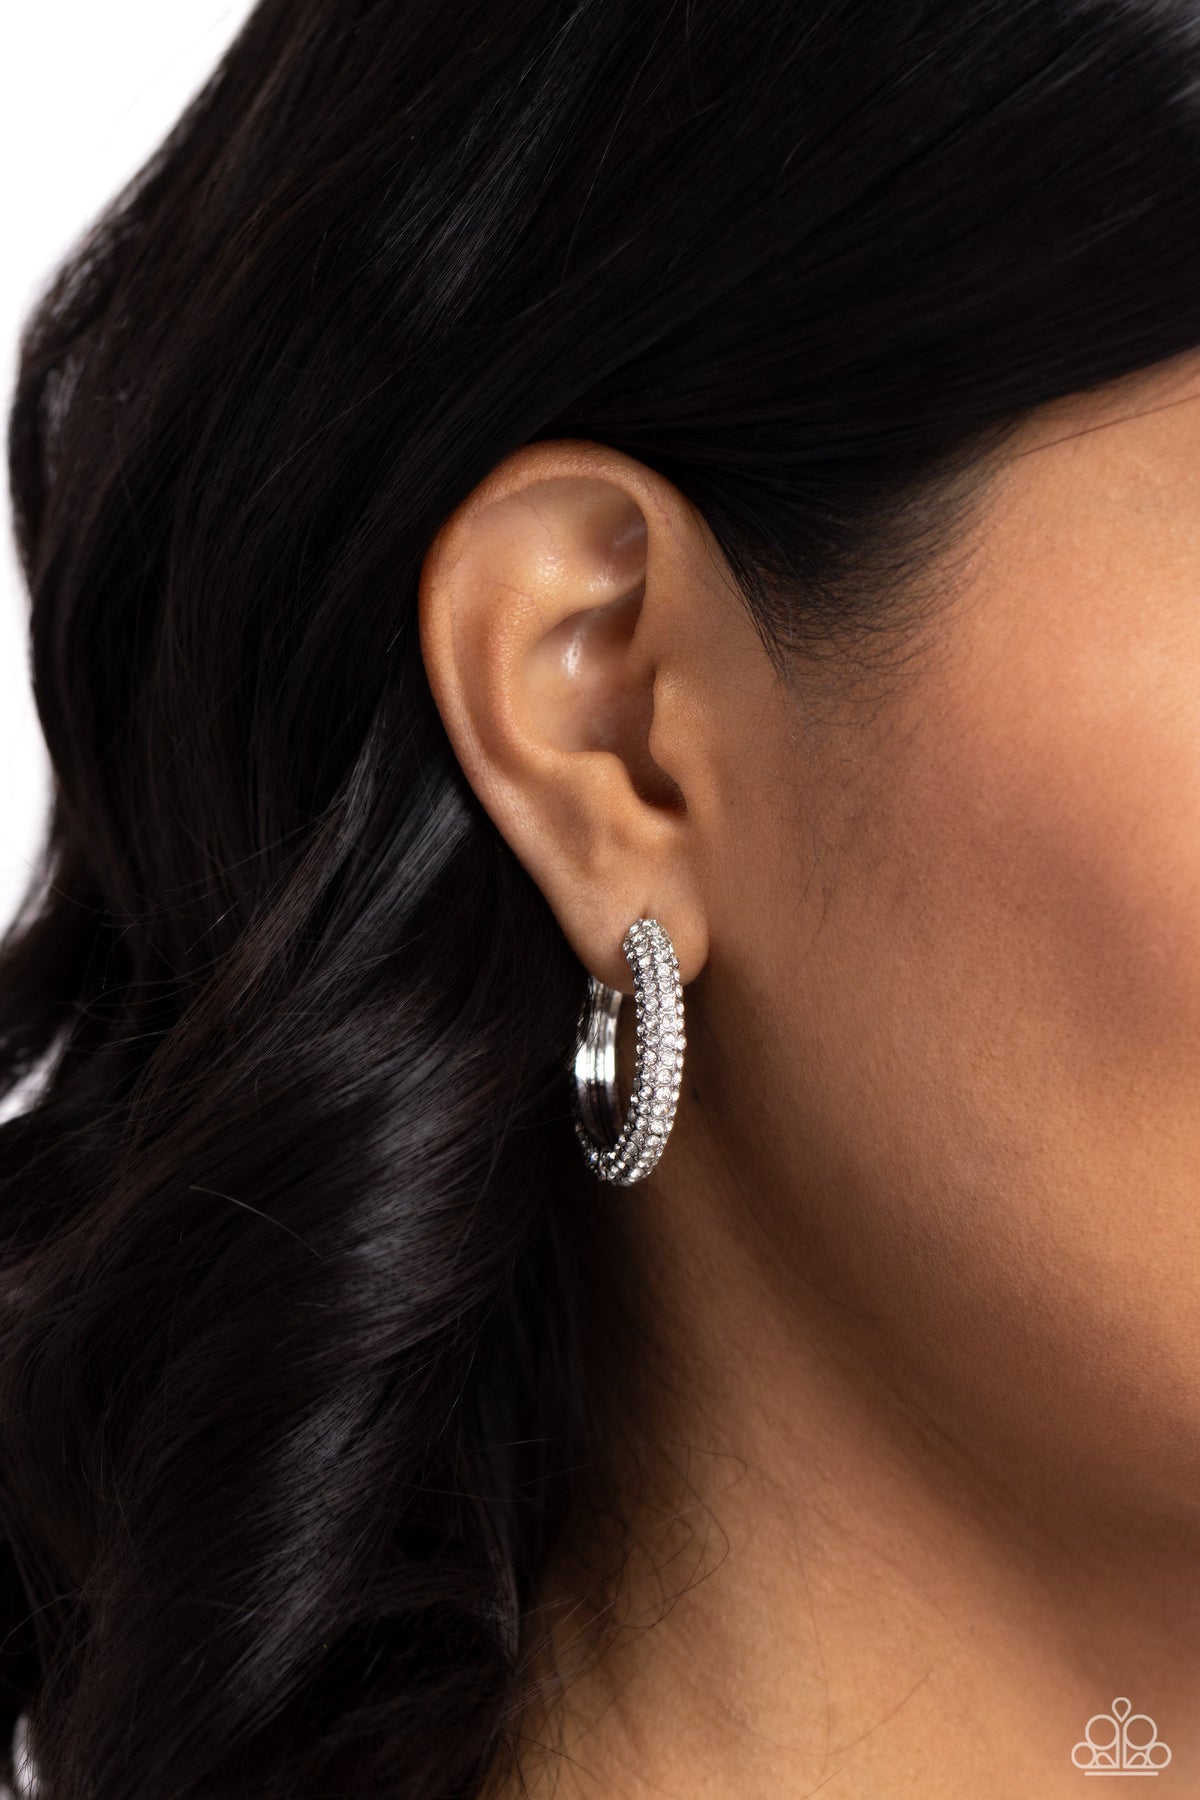 Glowing Praise White Rhinestone Hoop Earrings - Paparazzi Accessories-on model - CarasShop.com - $5 Jewelry by Cara Jewels